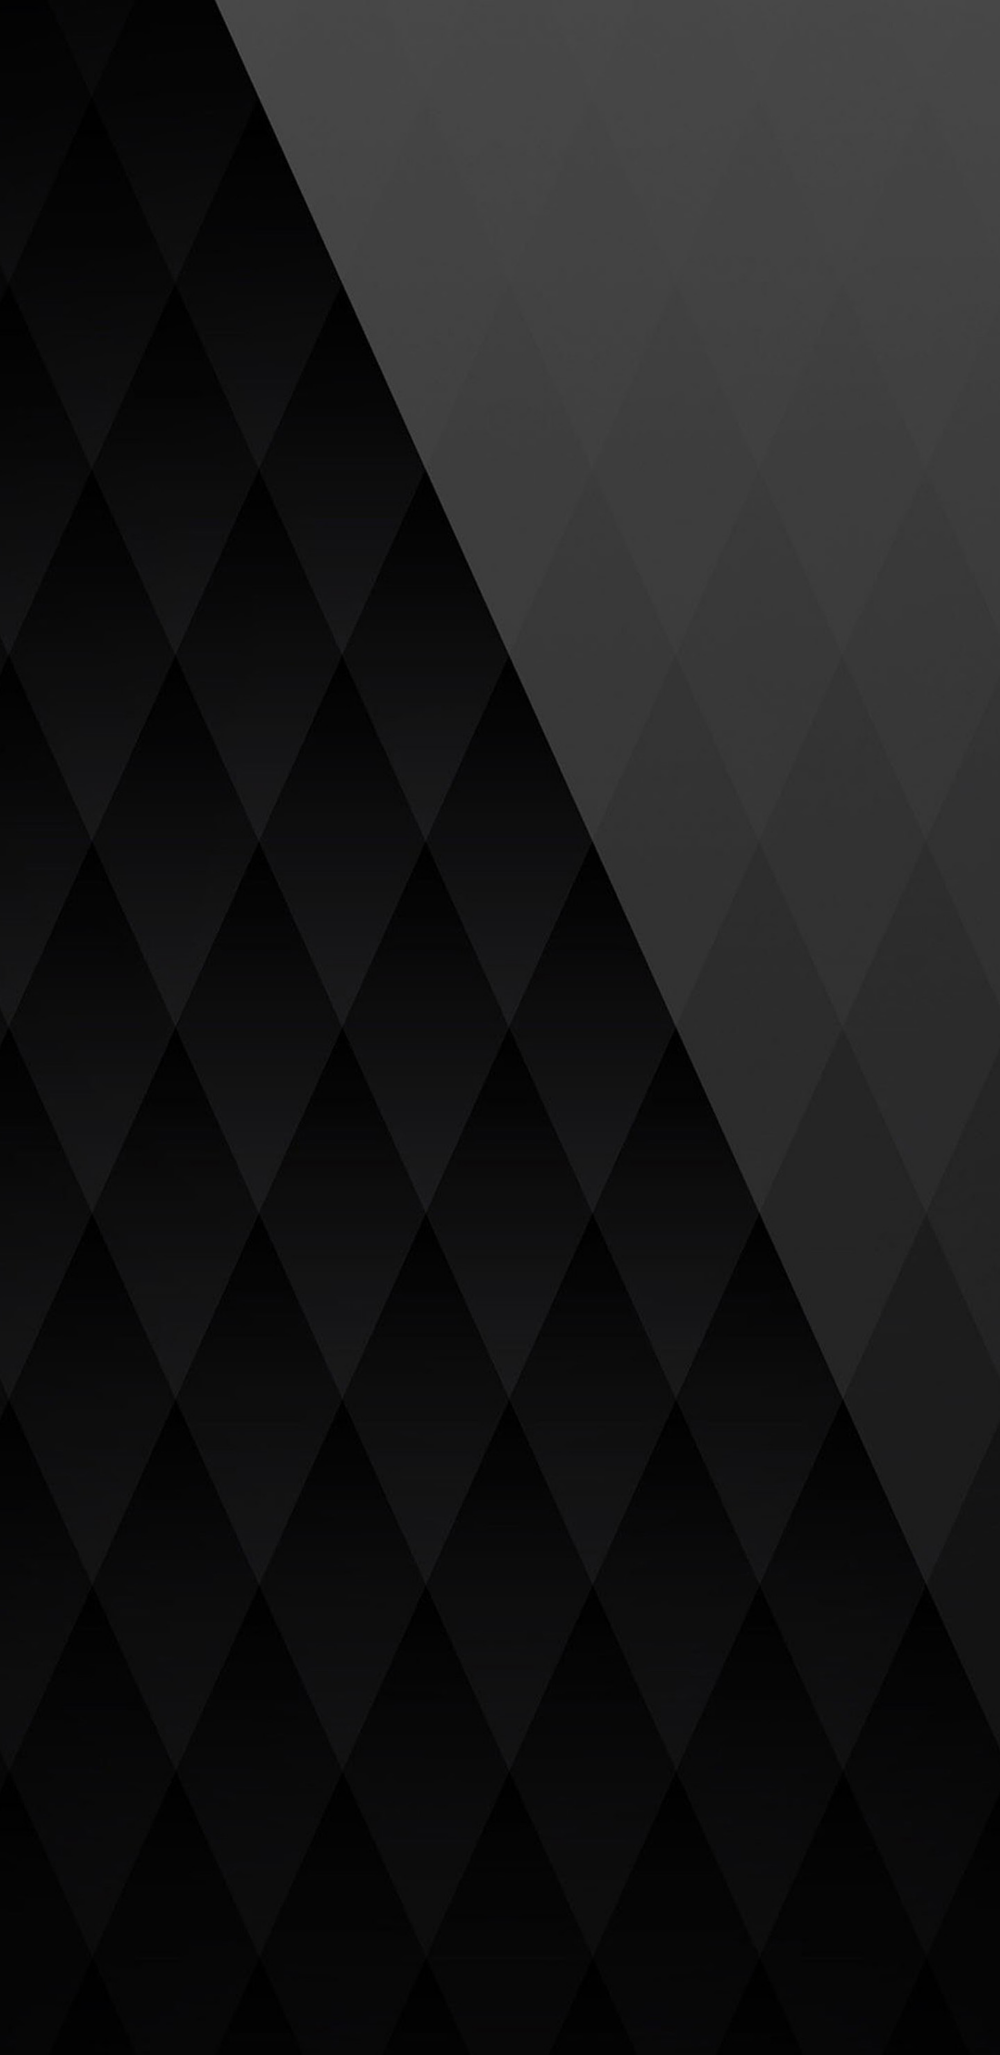 Black diamond hazy design wallpaper. Samsung wallpaper, Wallpaper, Black diamond